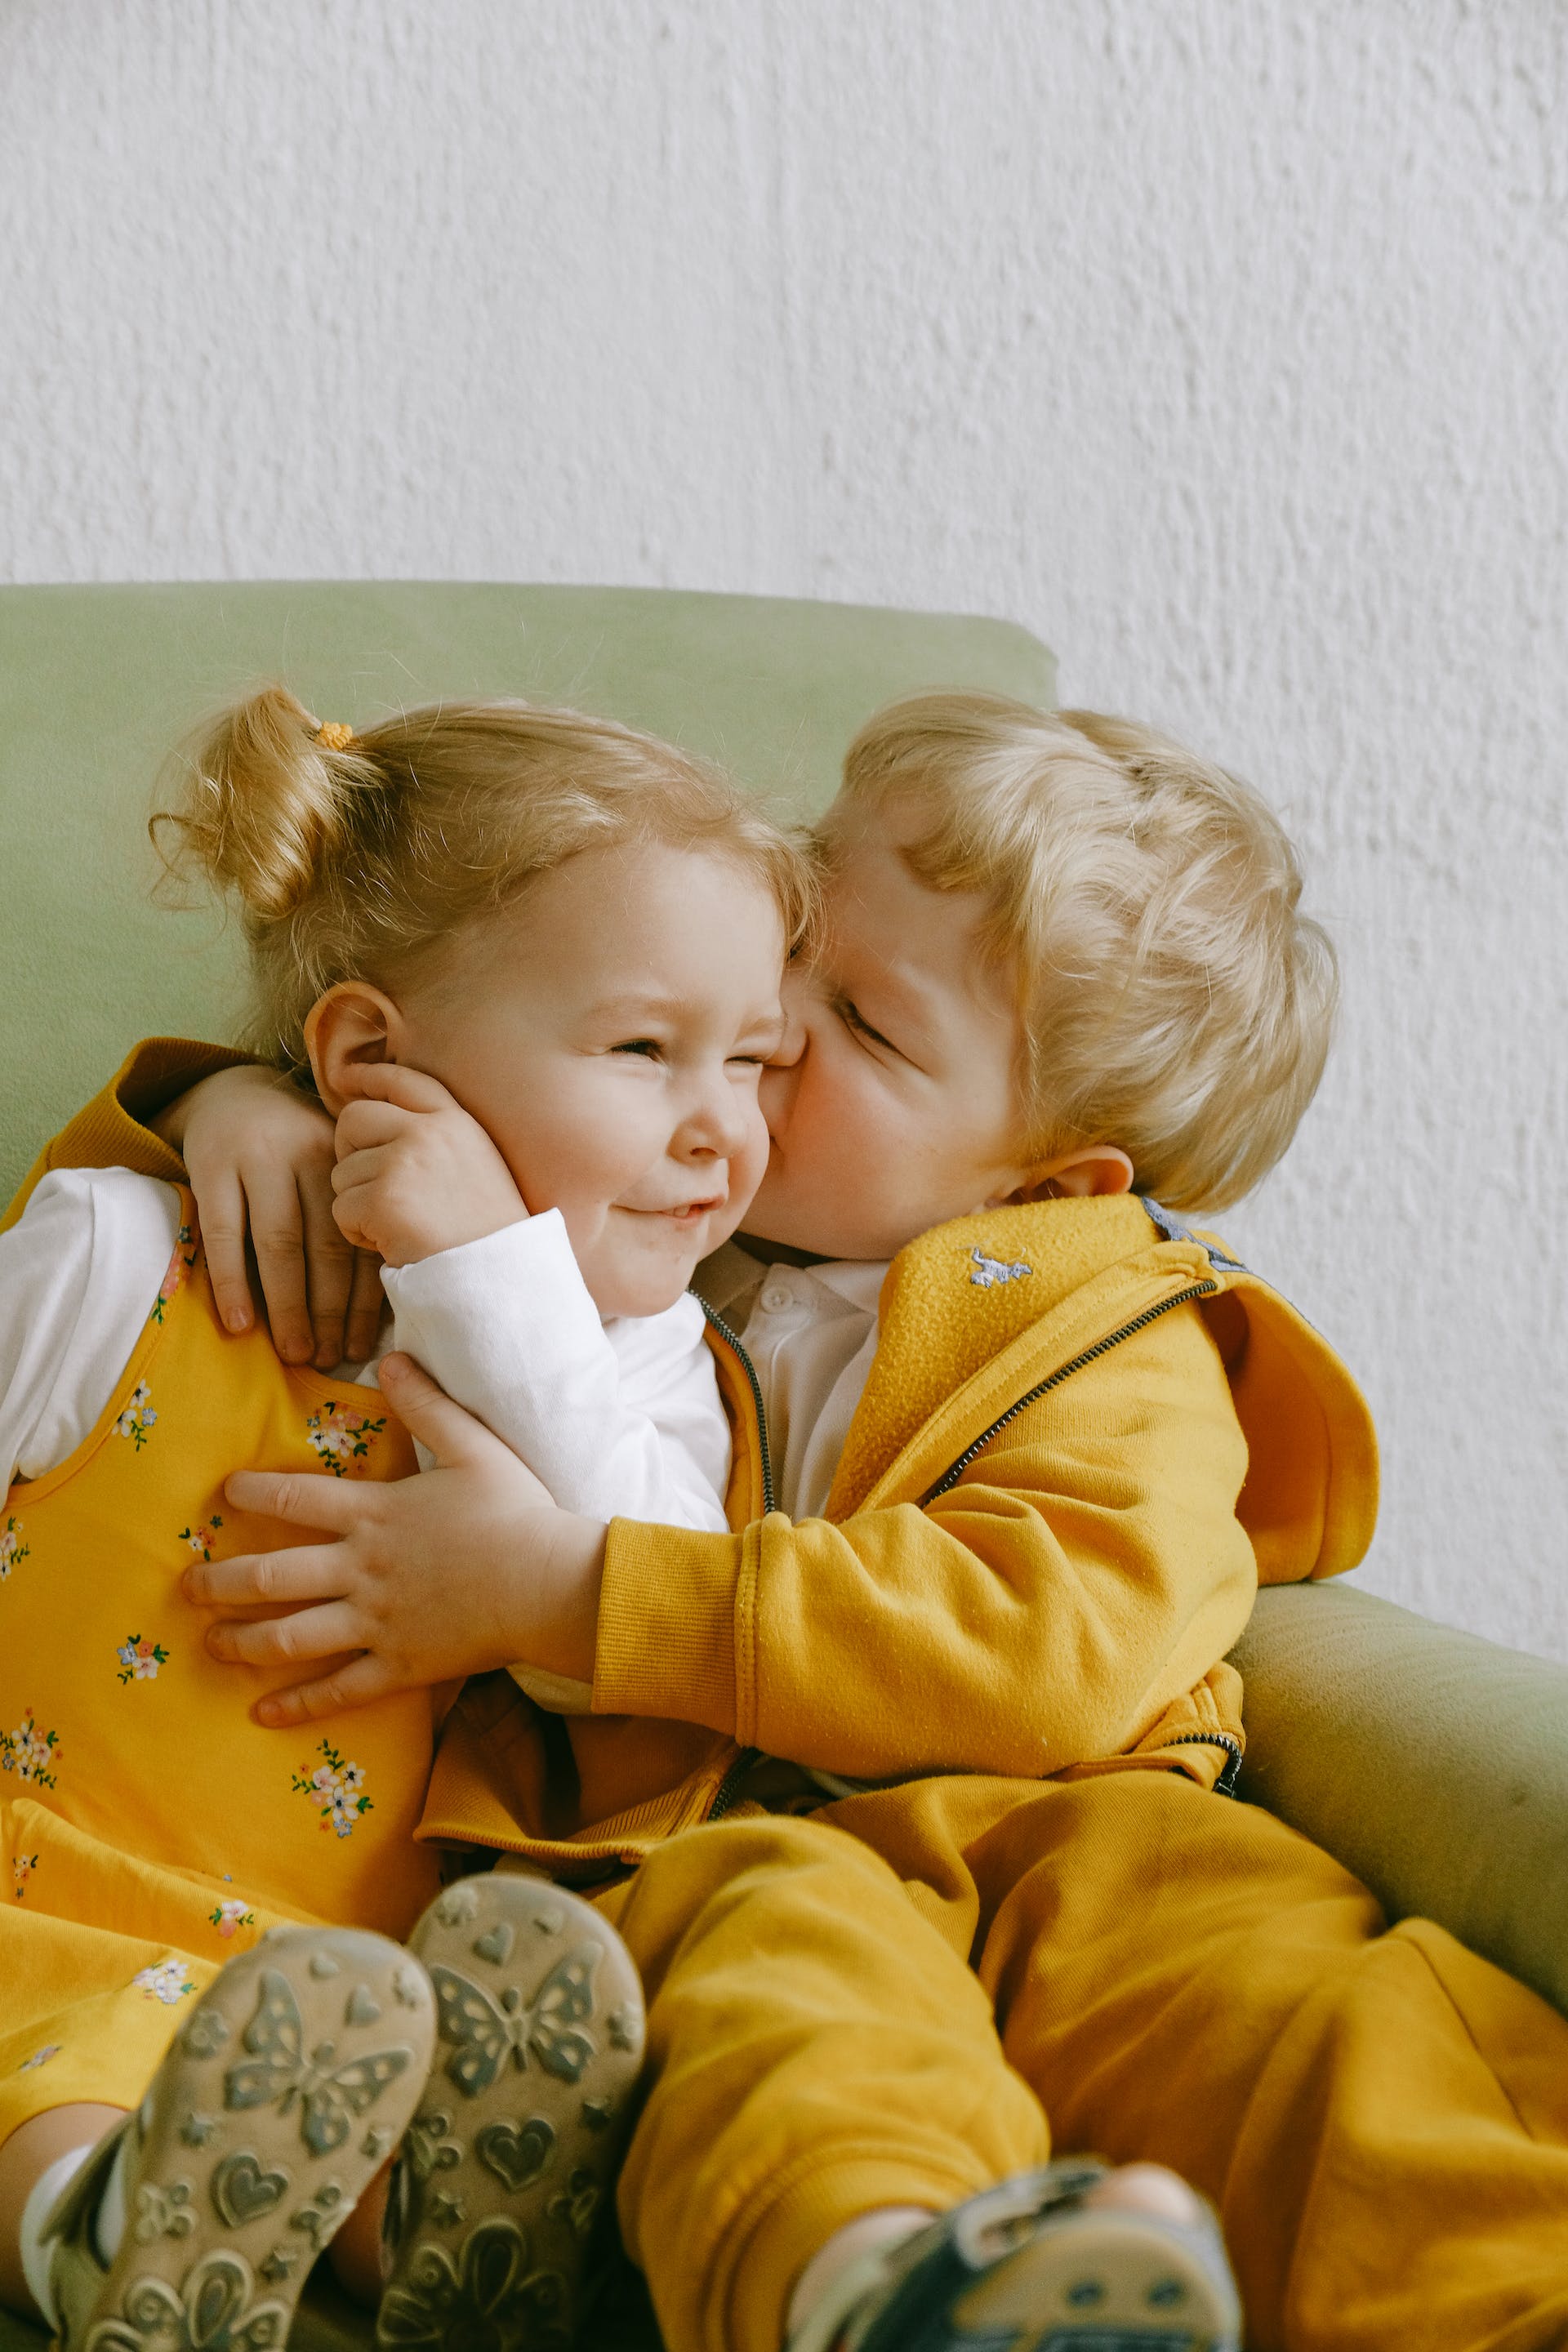 Siblings sitting together | Source: Pexels